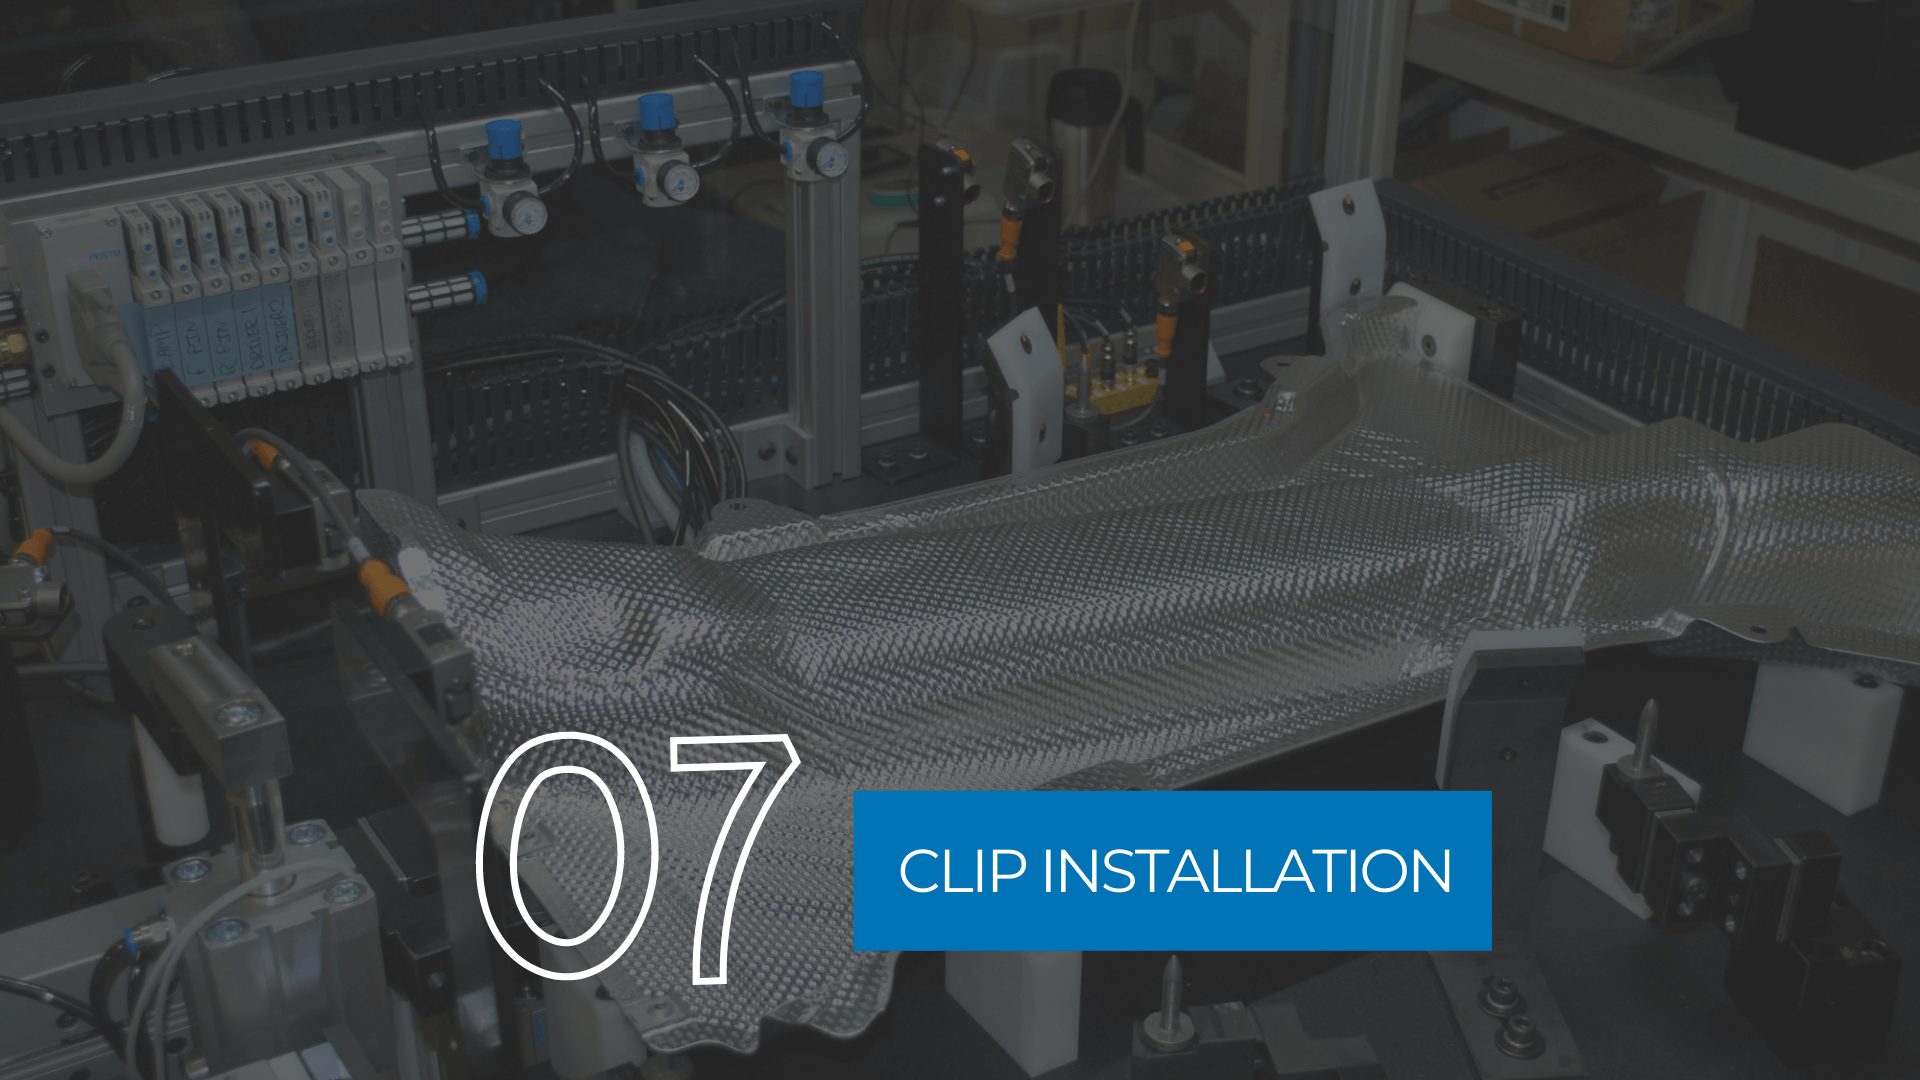 Automated Machine Systems-Cincinnati Clip Installation